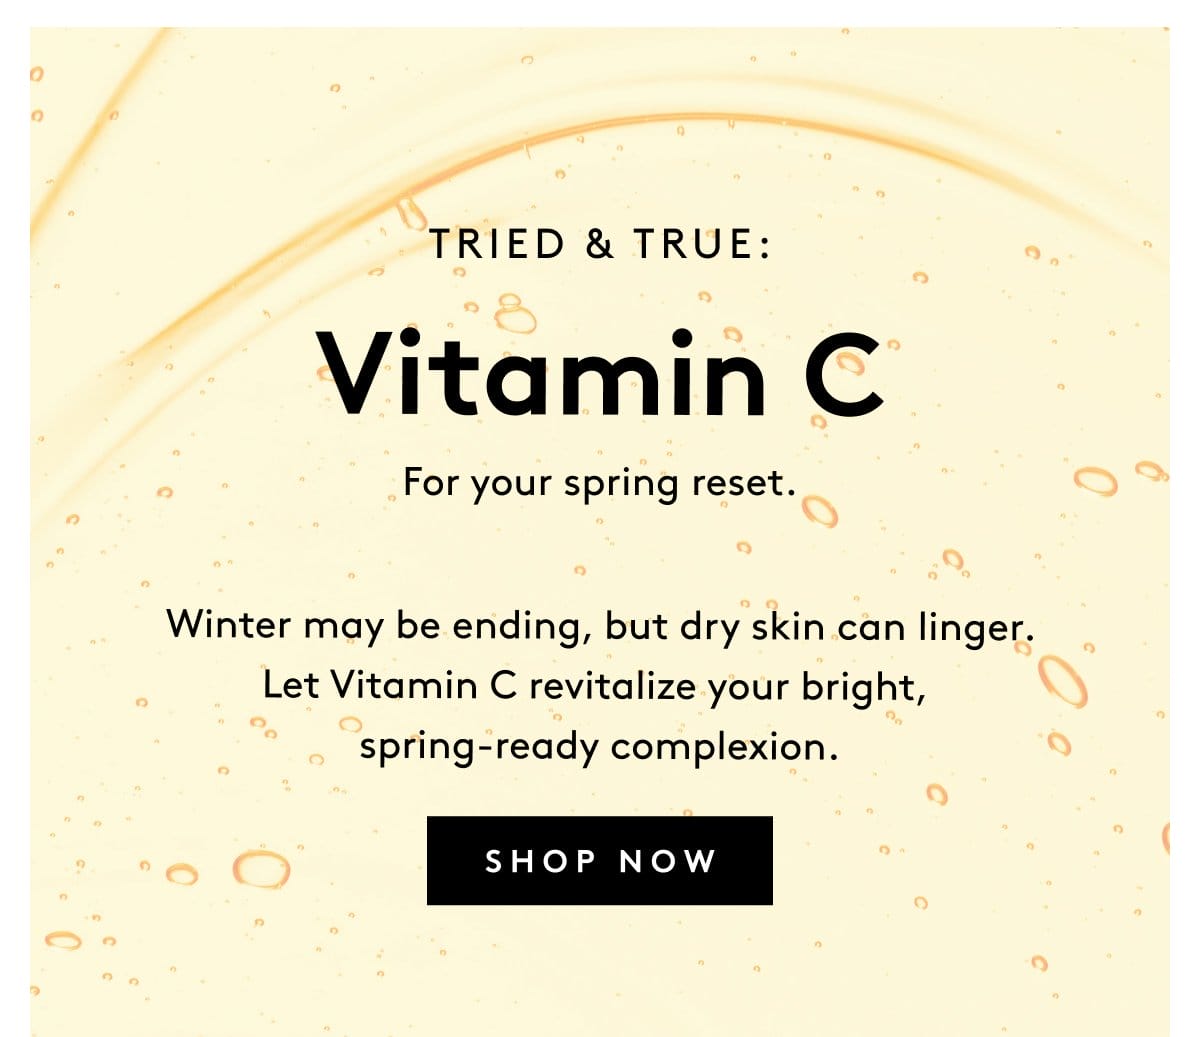 Tried & True: Vitamin C